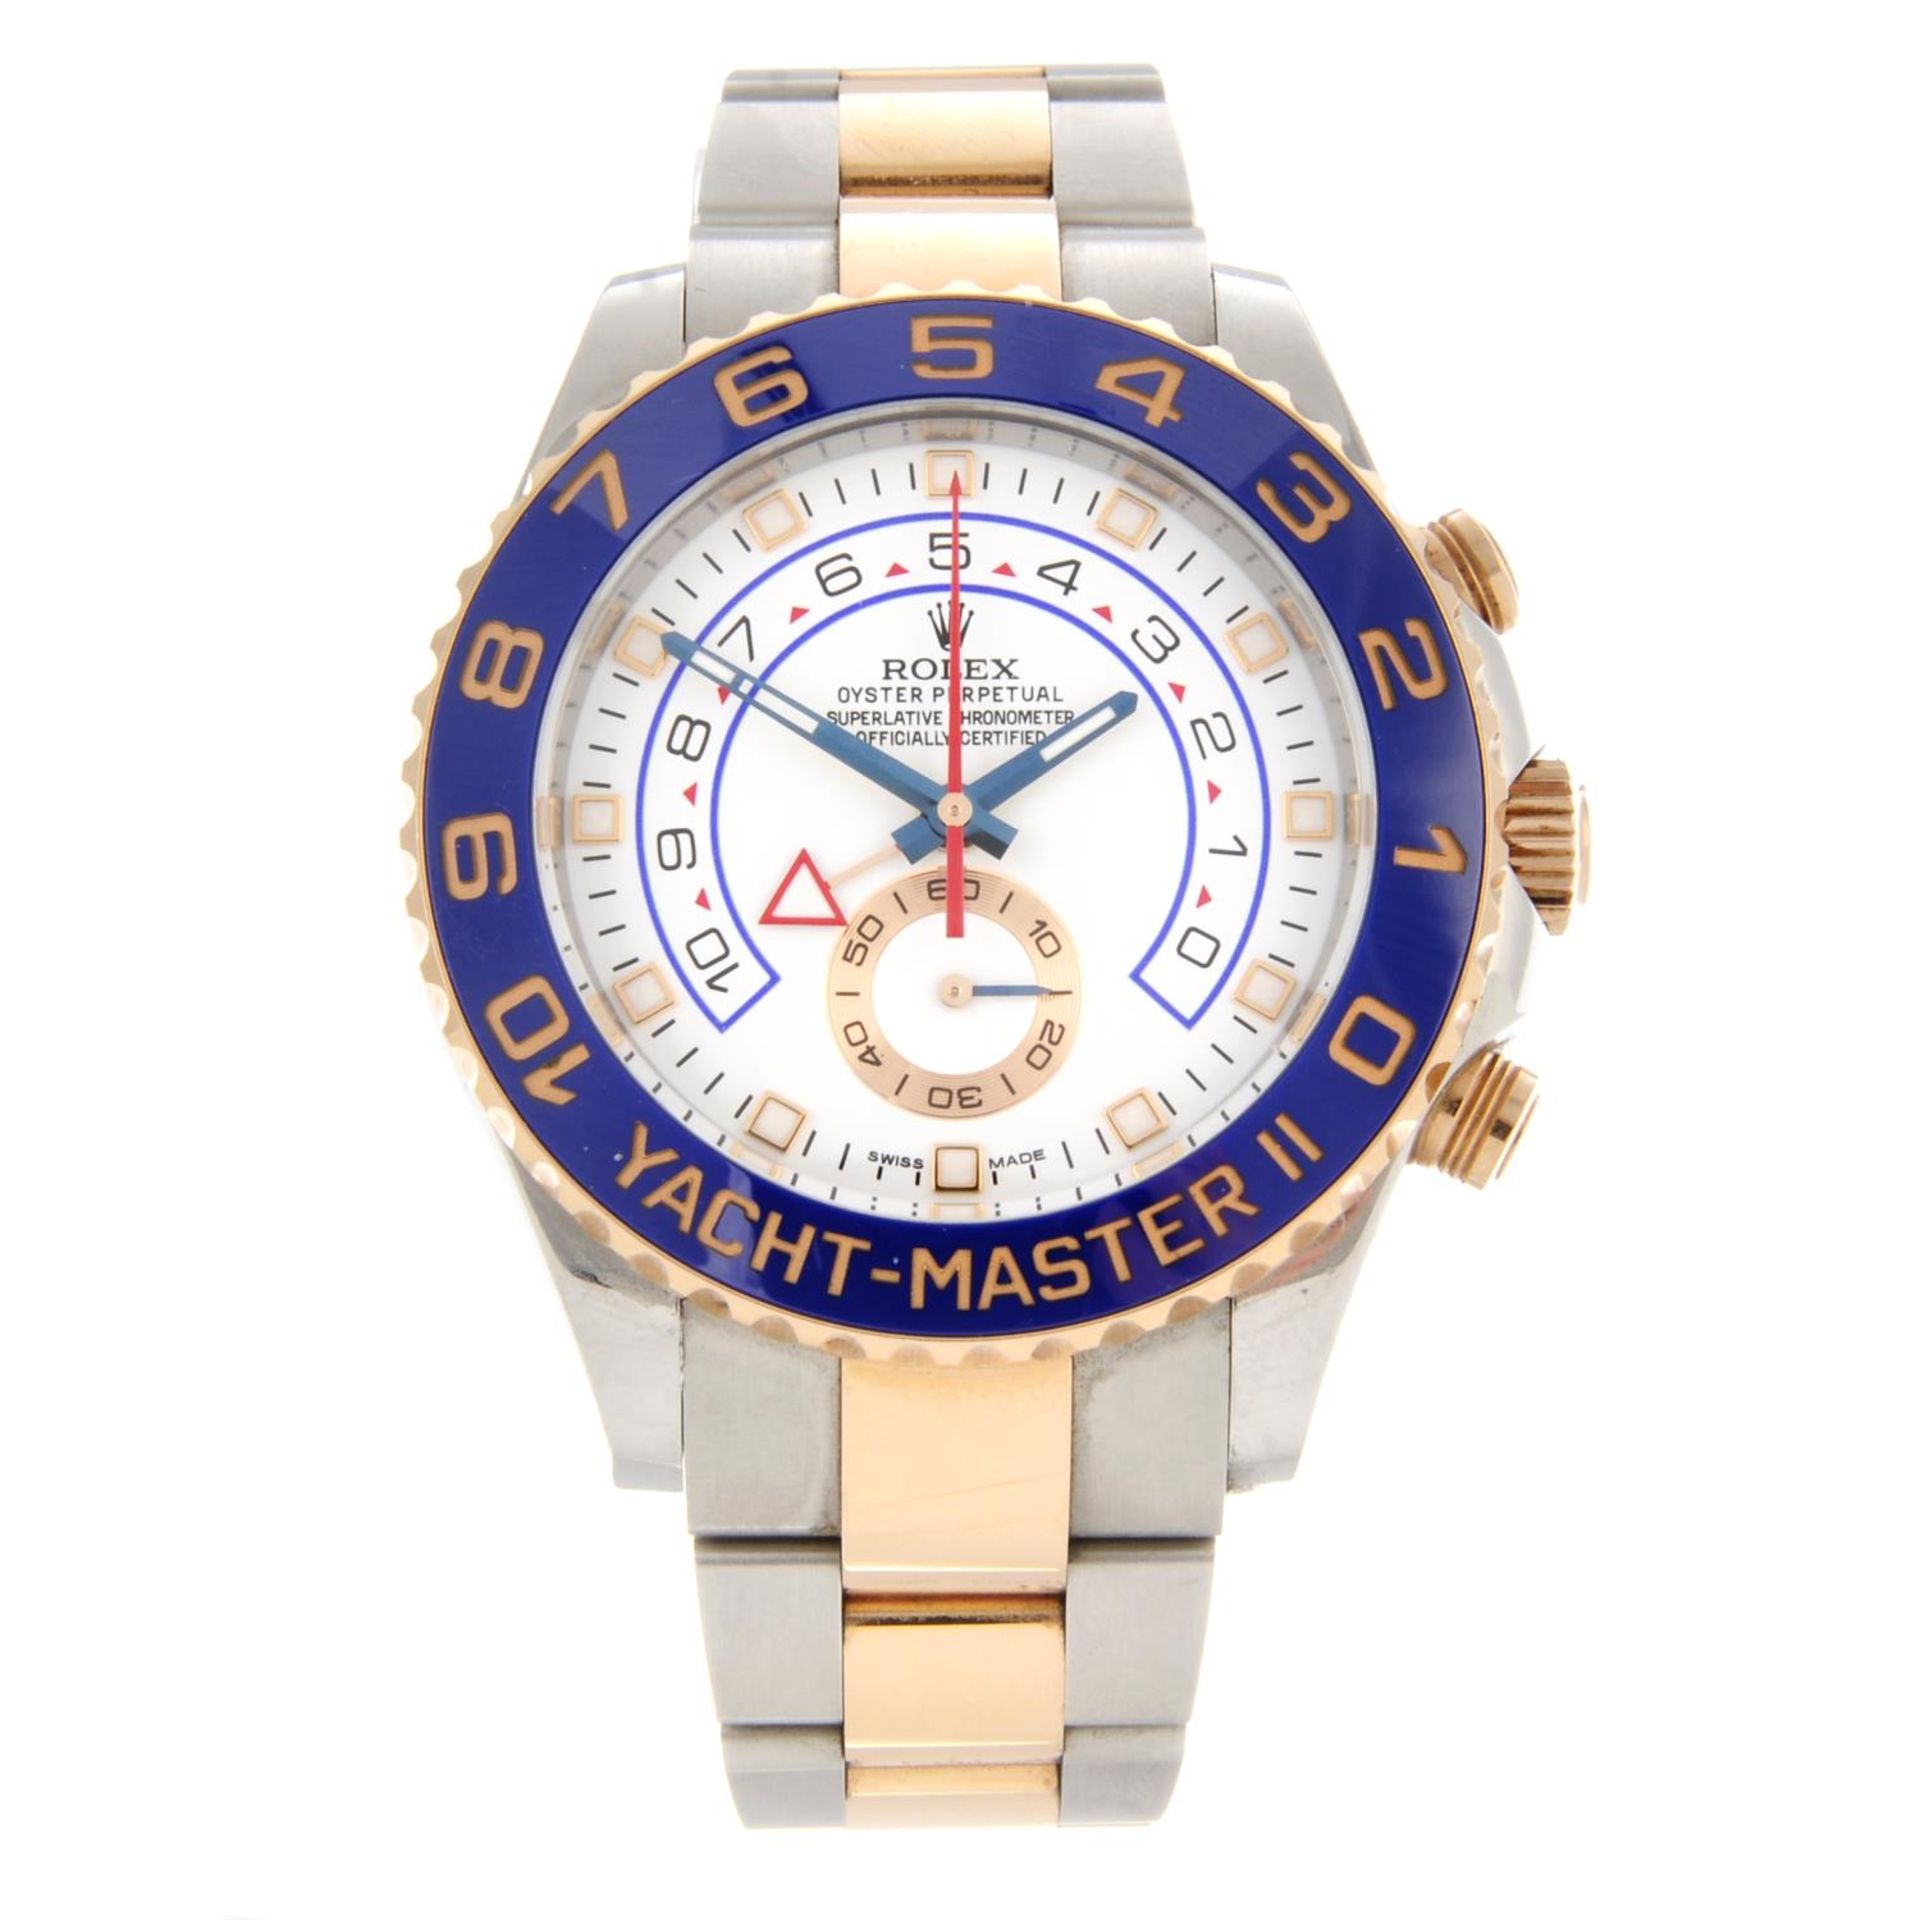 CURRENT MODEL: ROLEX - a gentleman's Oyster Perpetual Yacht-Master II bracelet watch.